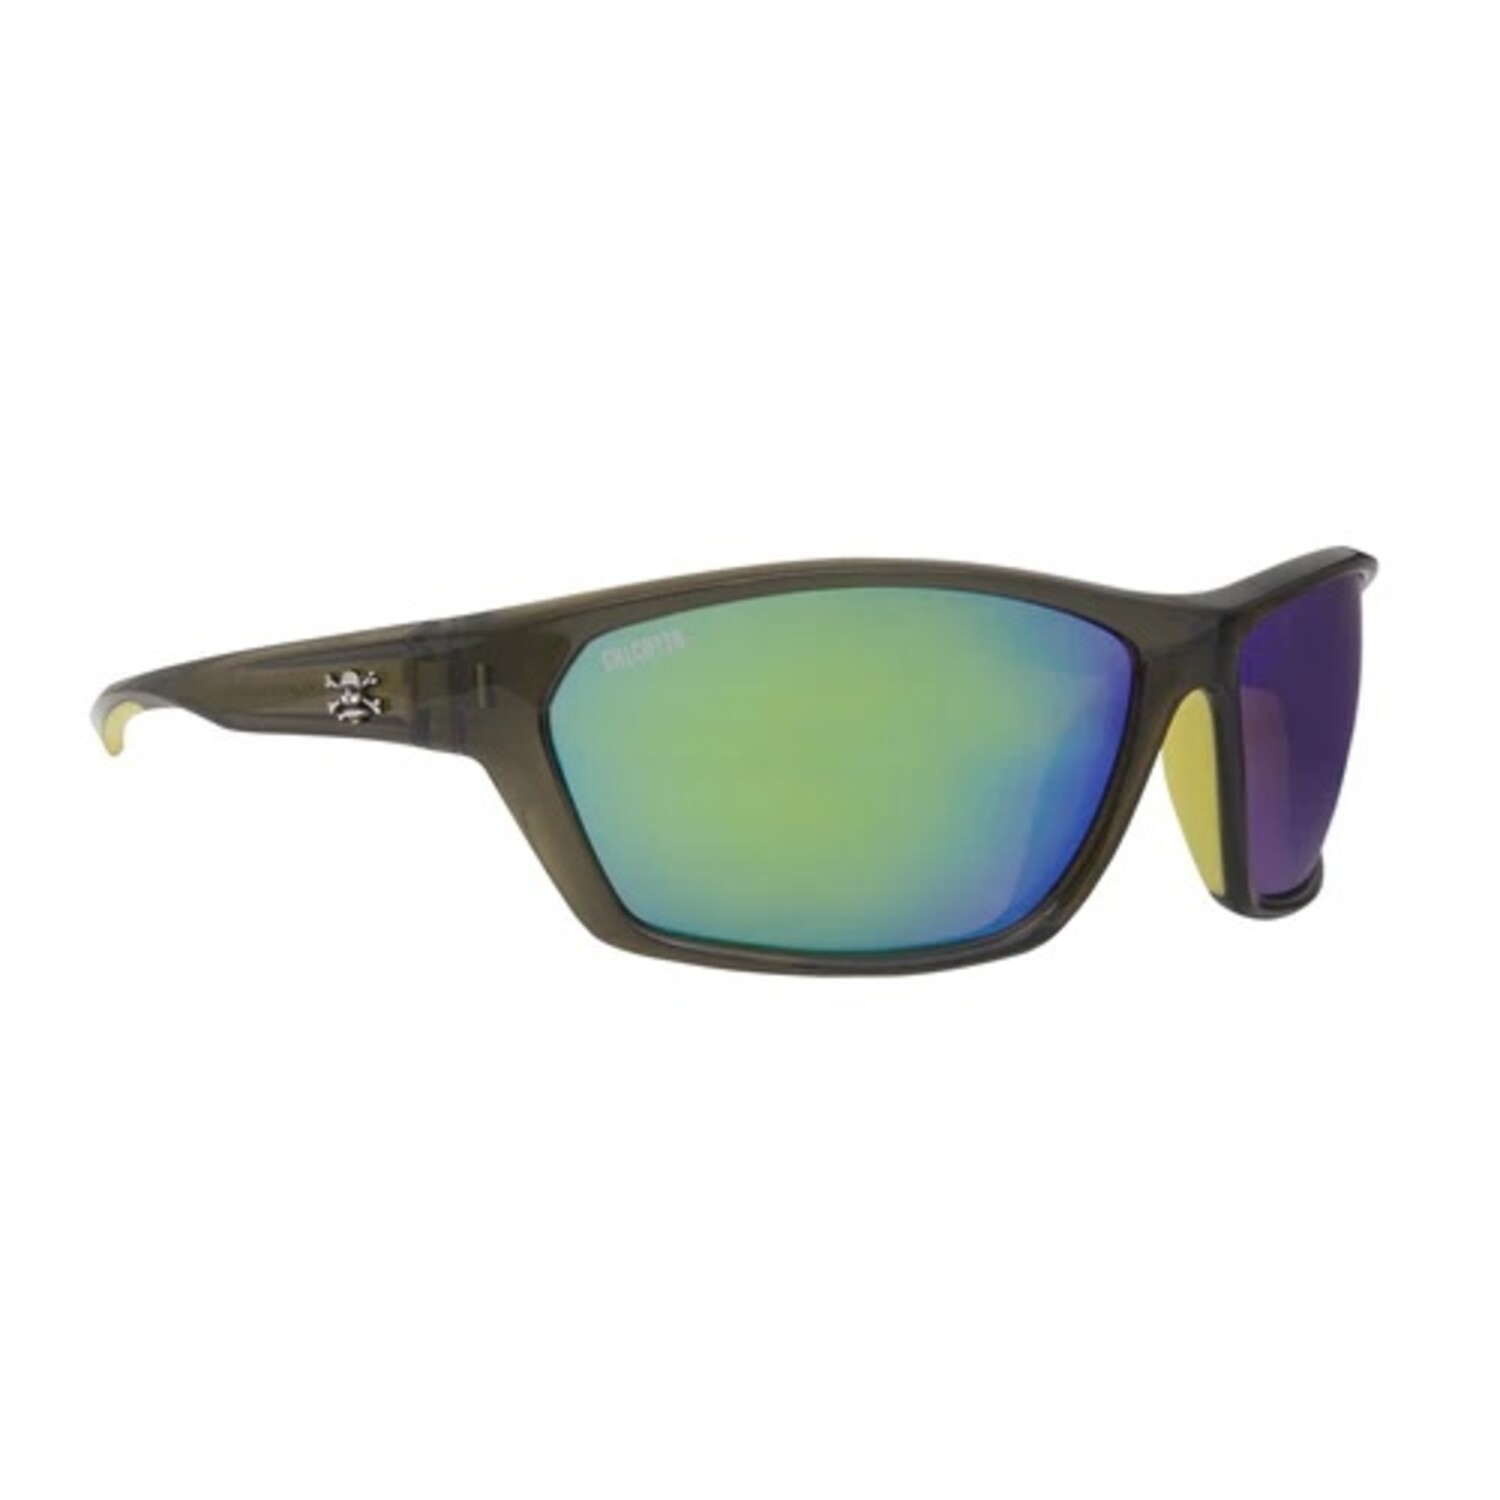 Calcutta Steelhead Polarized Fishing Sunglasses, Black Frame/Blue